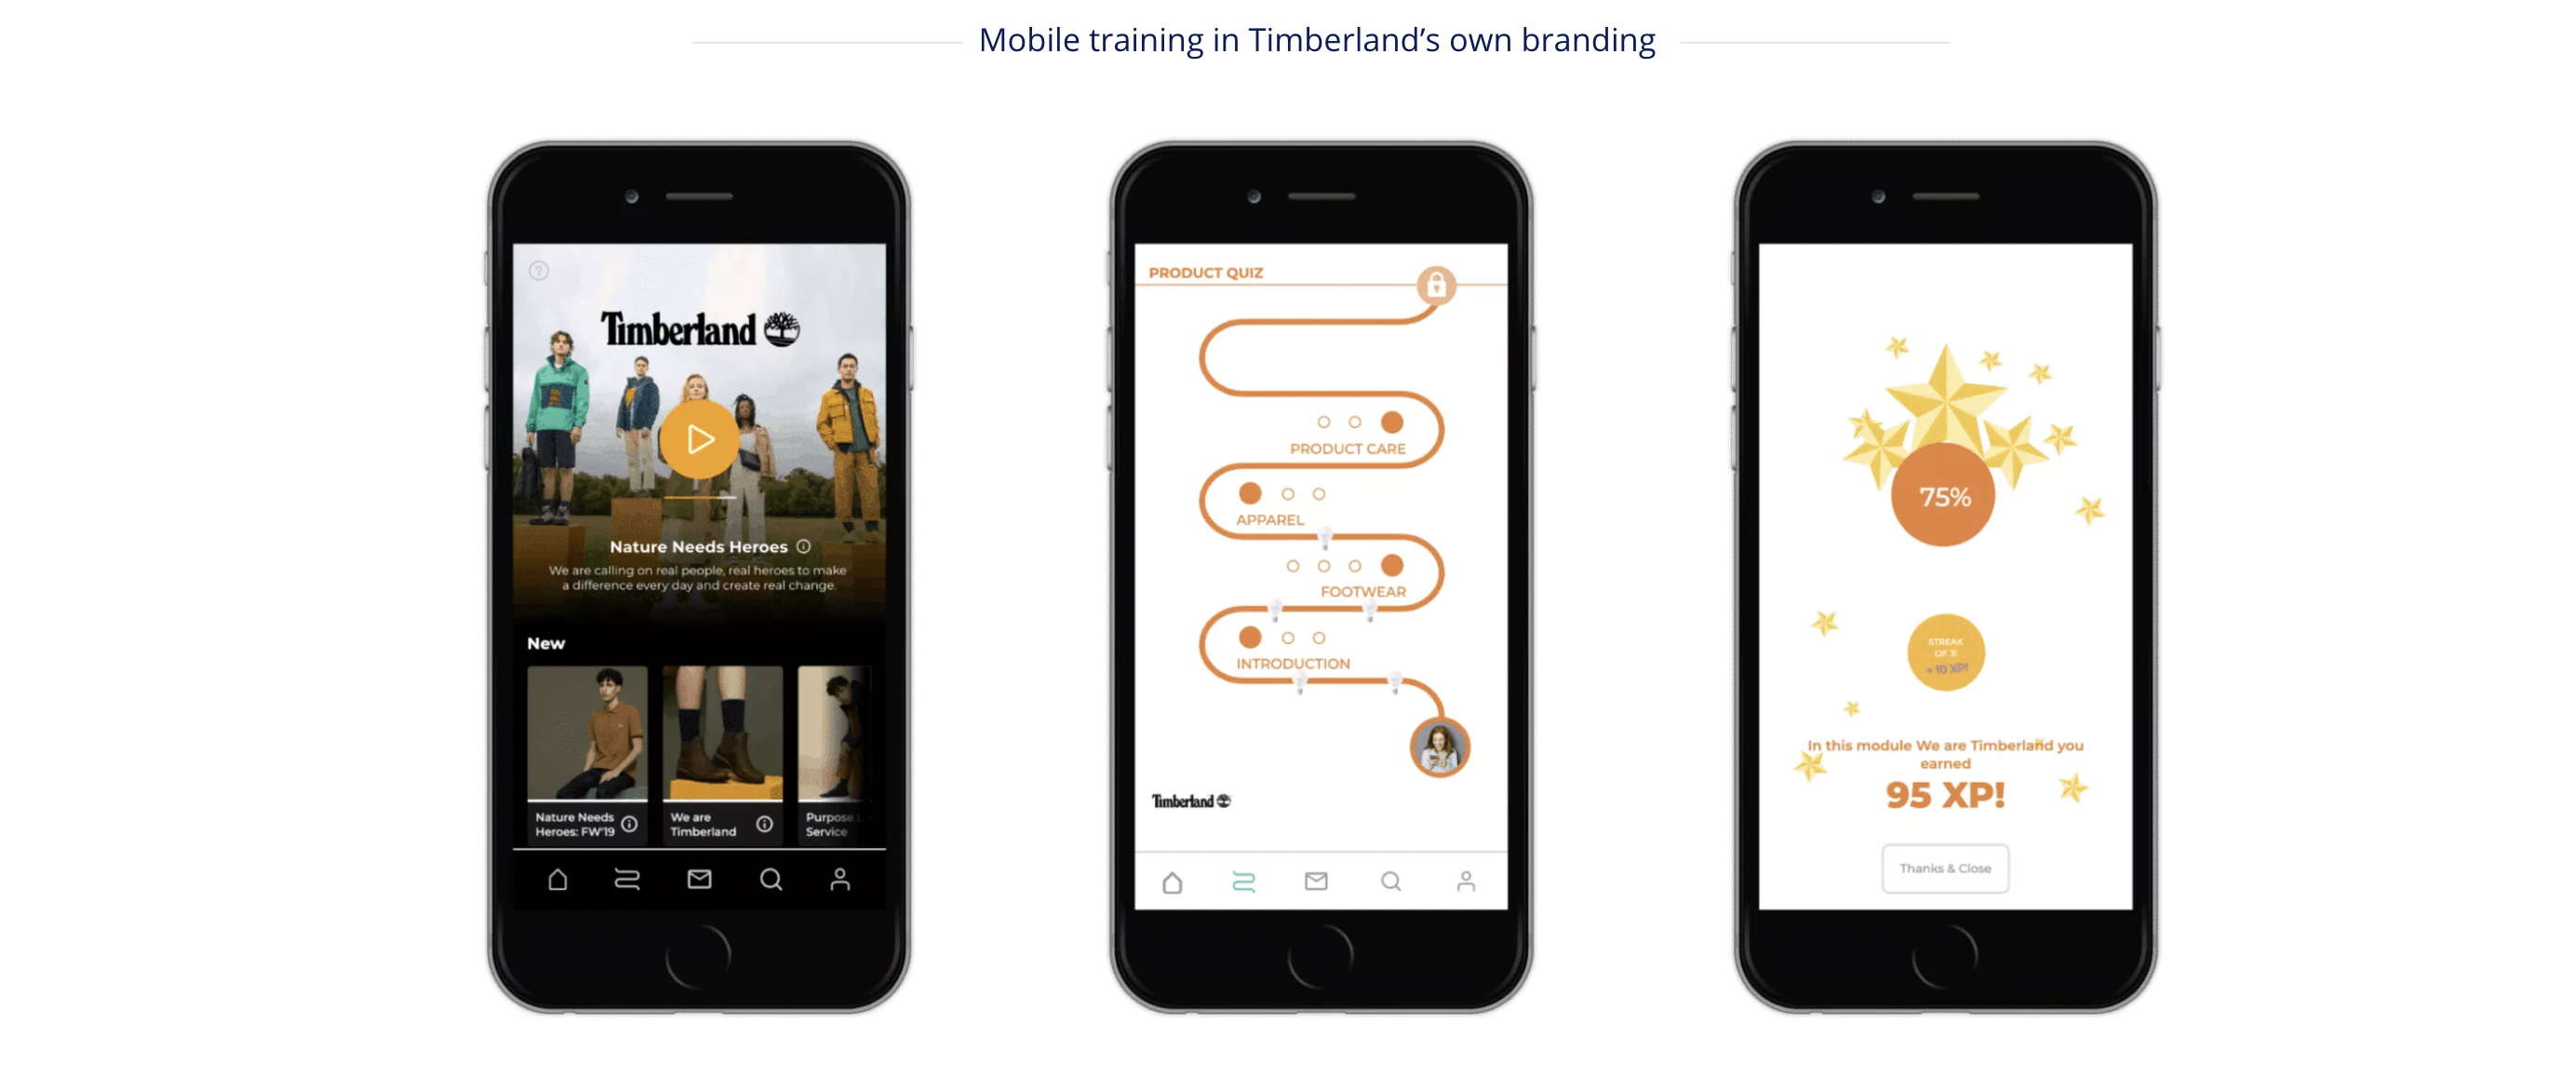 L'application MobieTrain pour Timberland